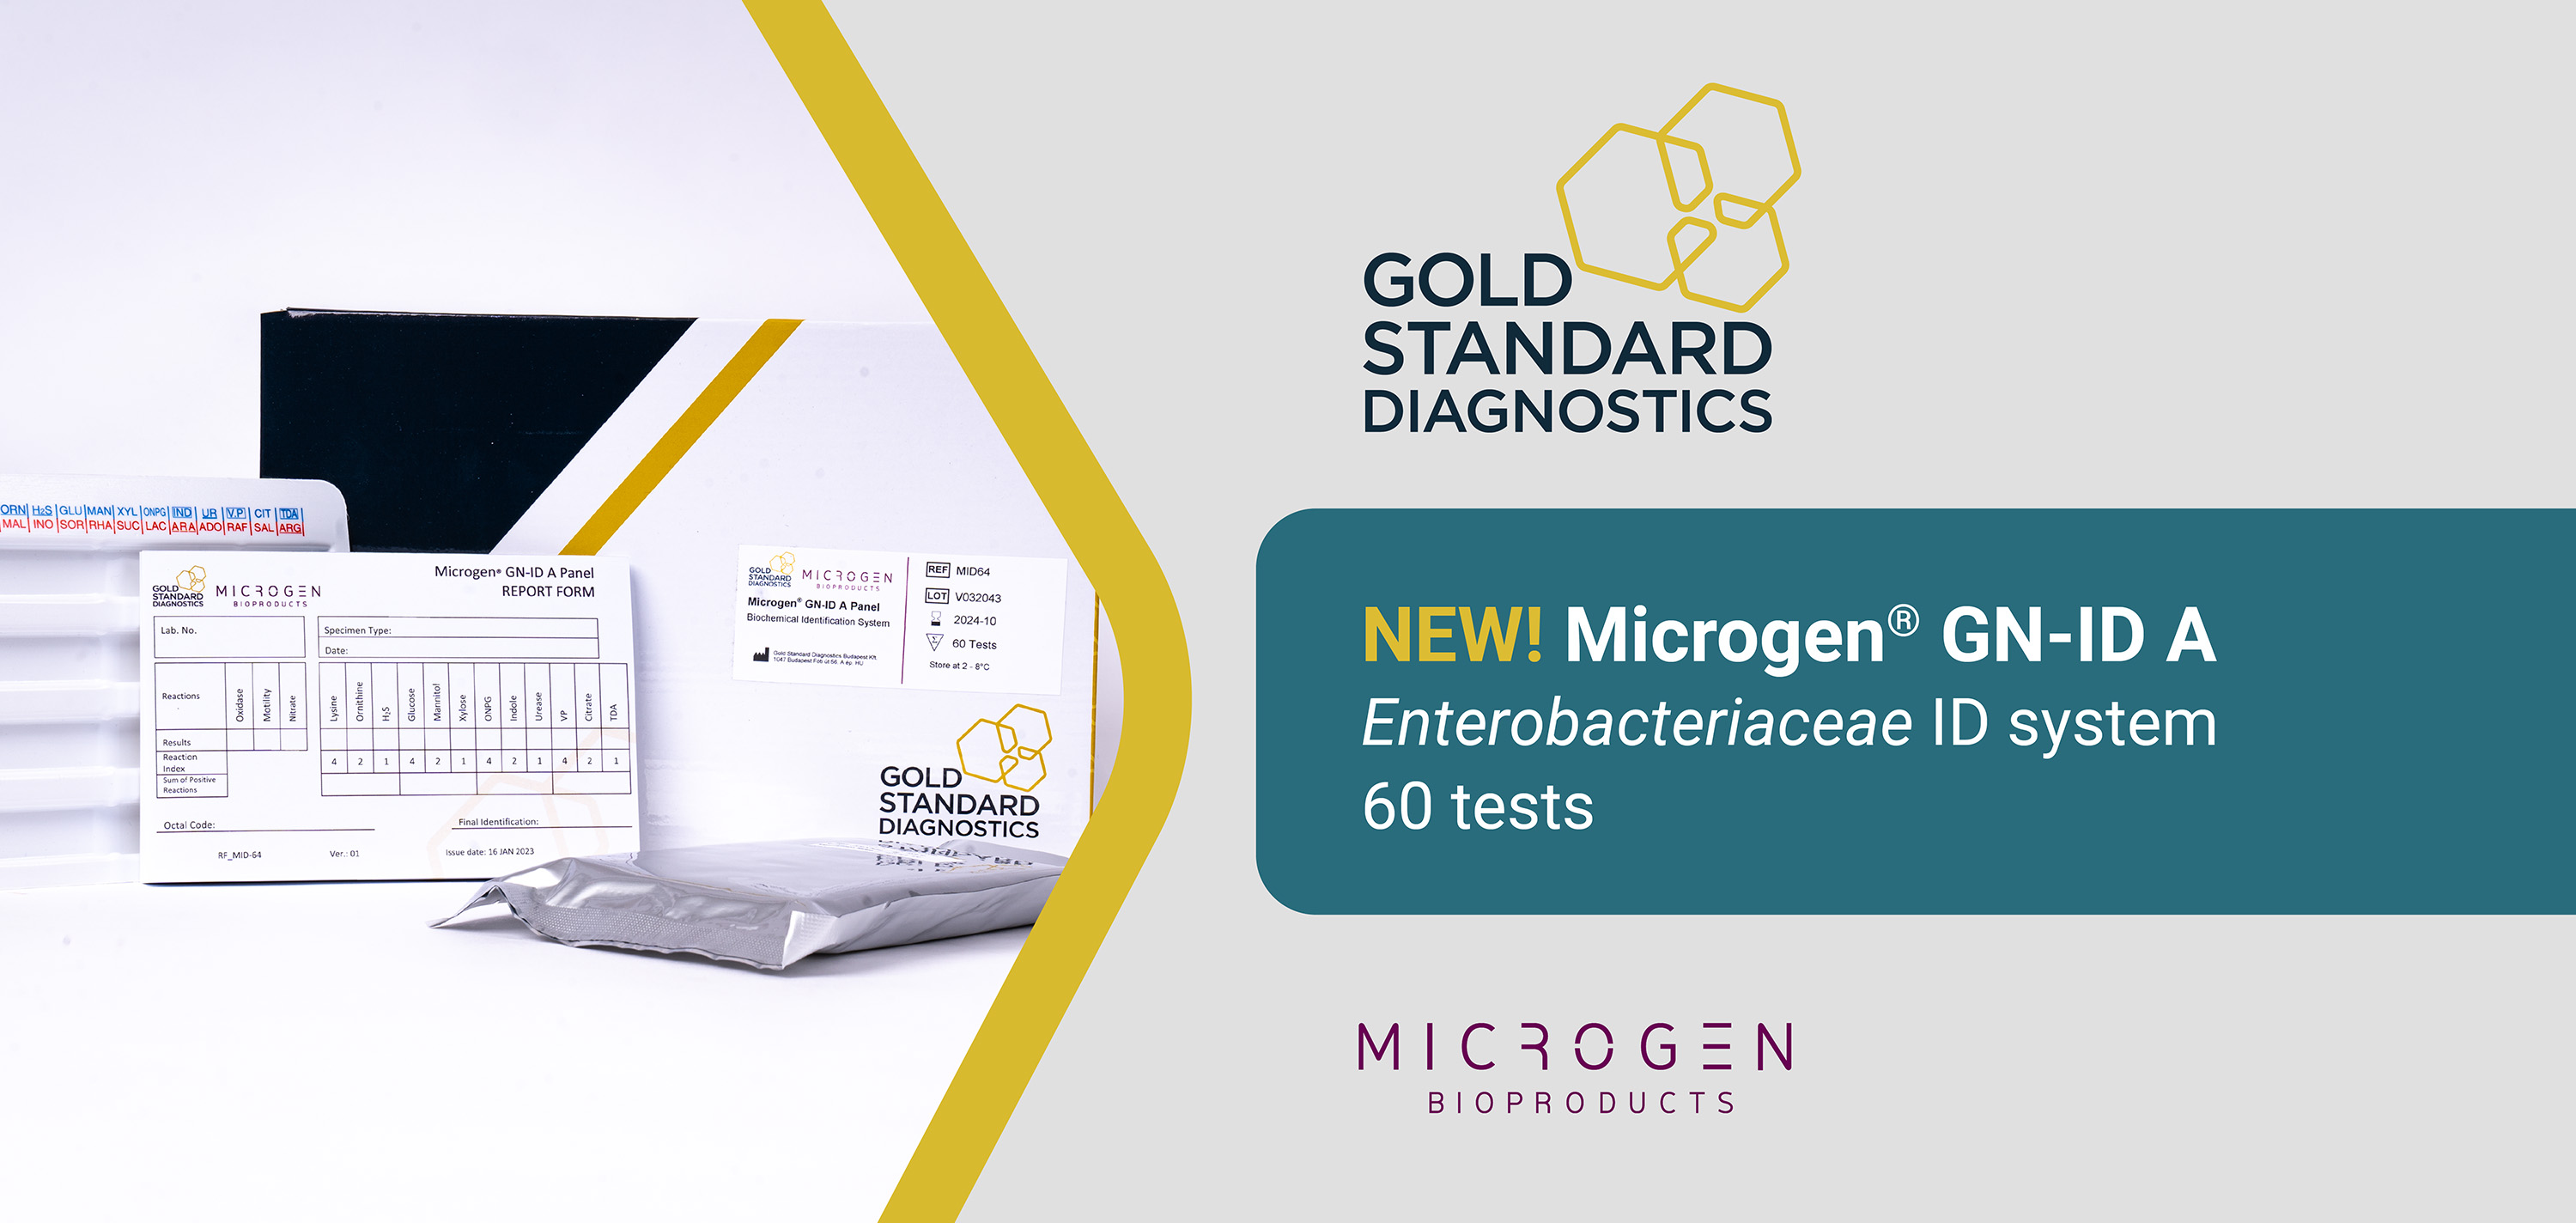 Gold Standard Diagnostics launches Microgen GN-ID A